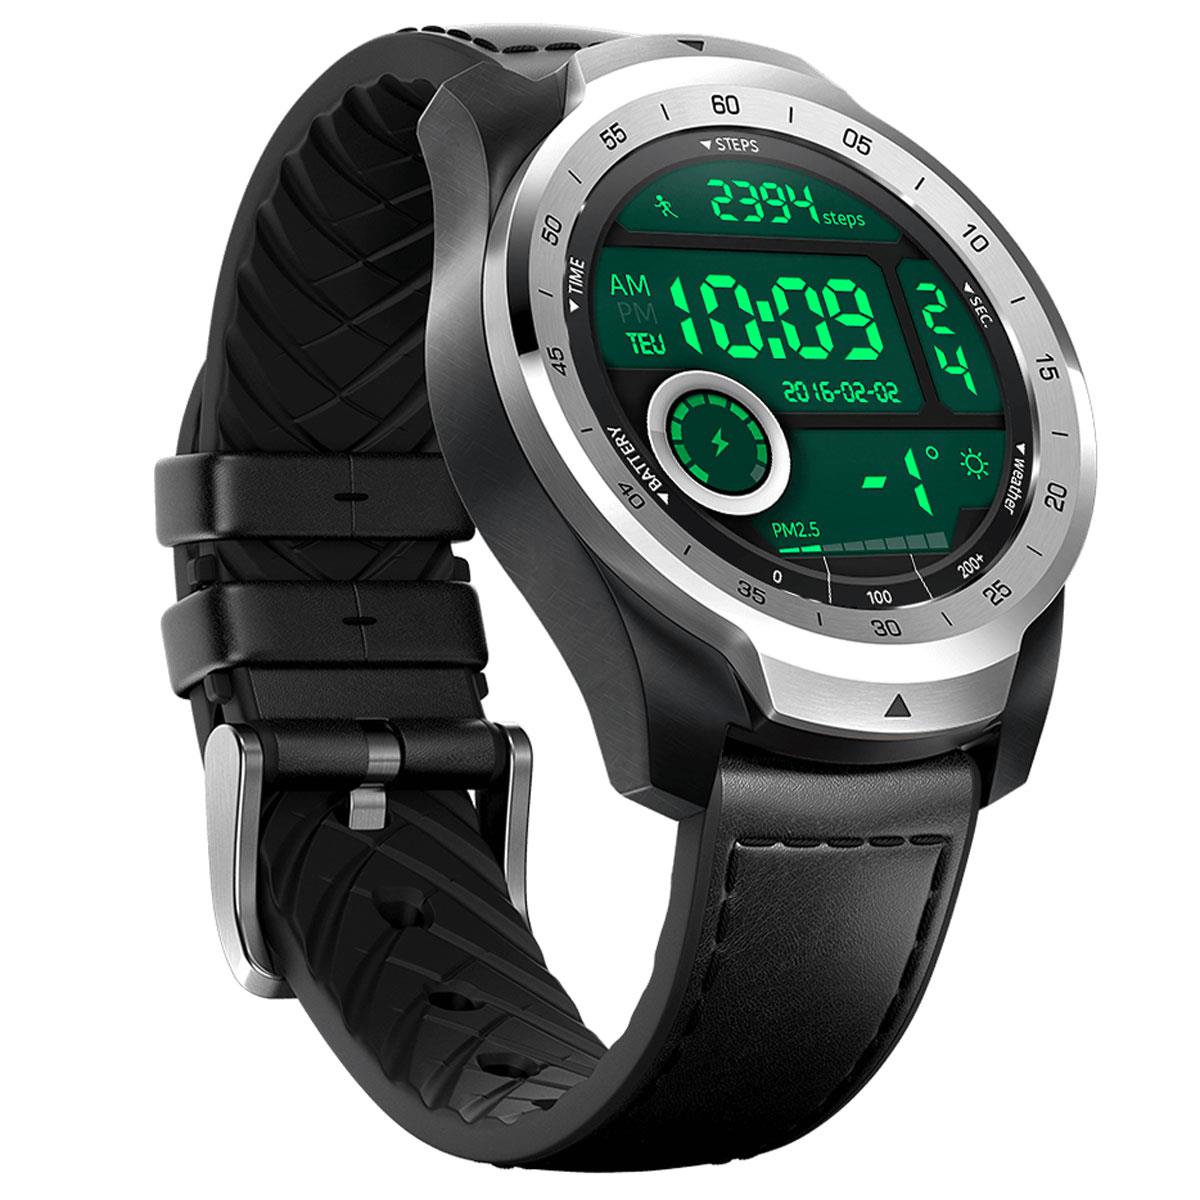 Image of Mobvoi TicWatch Pro 2020 Smartwatch